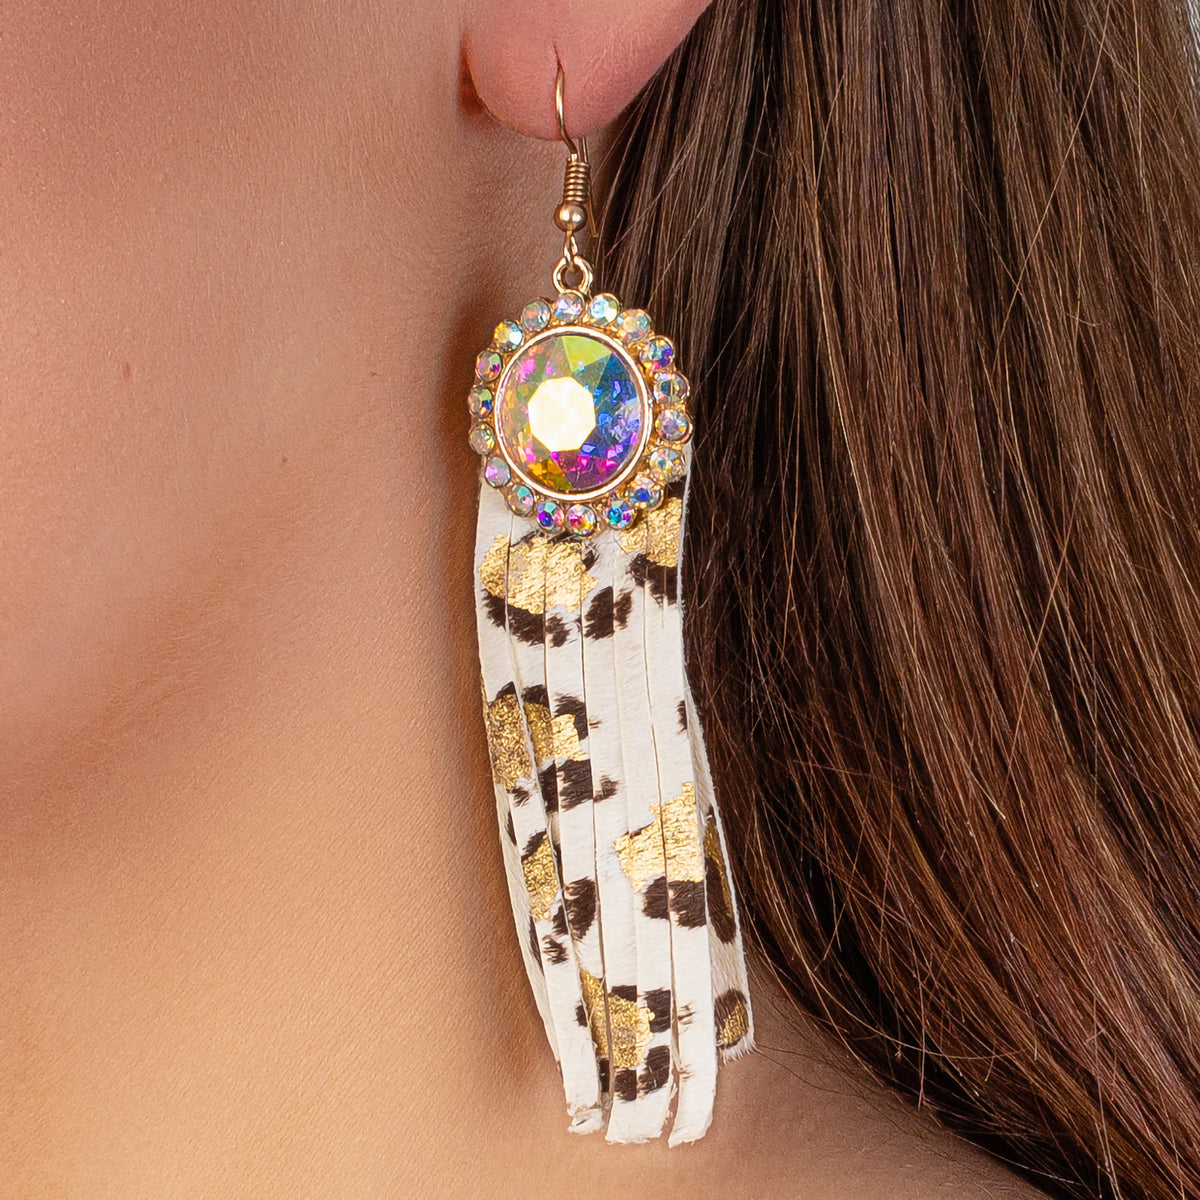 93020 - Rhinestone Tassel Earrings - White - Fashion Jewelry Wholesale